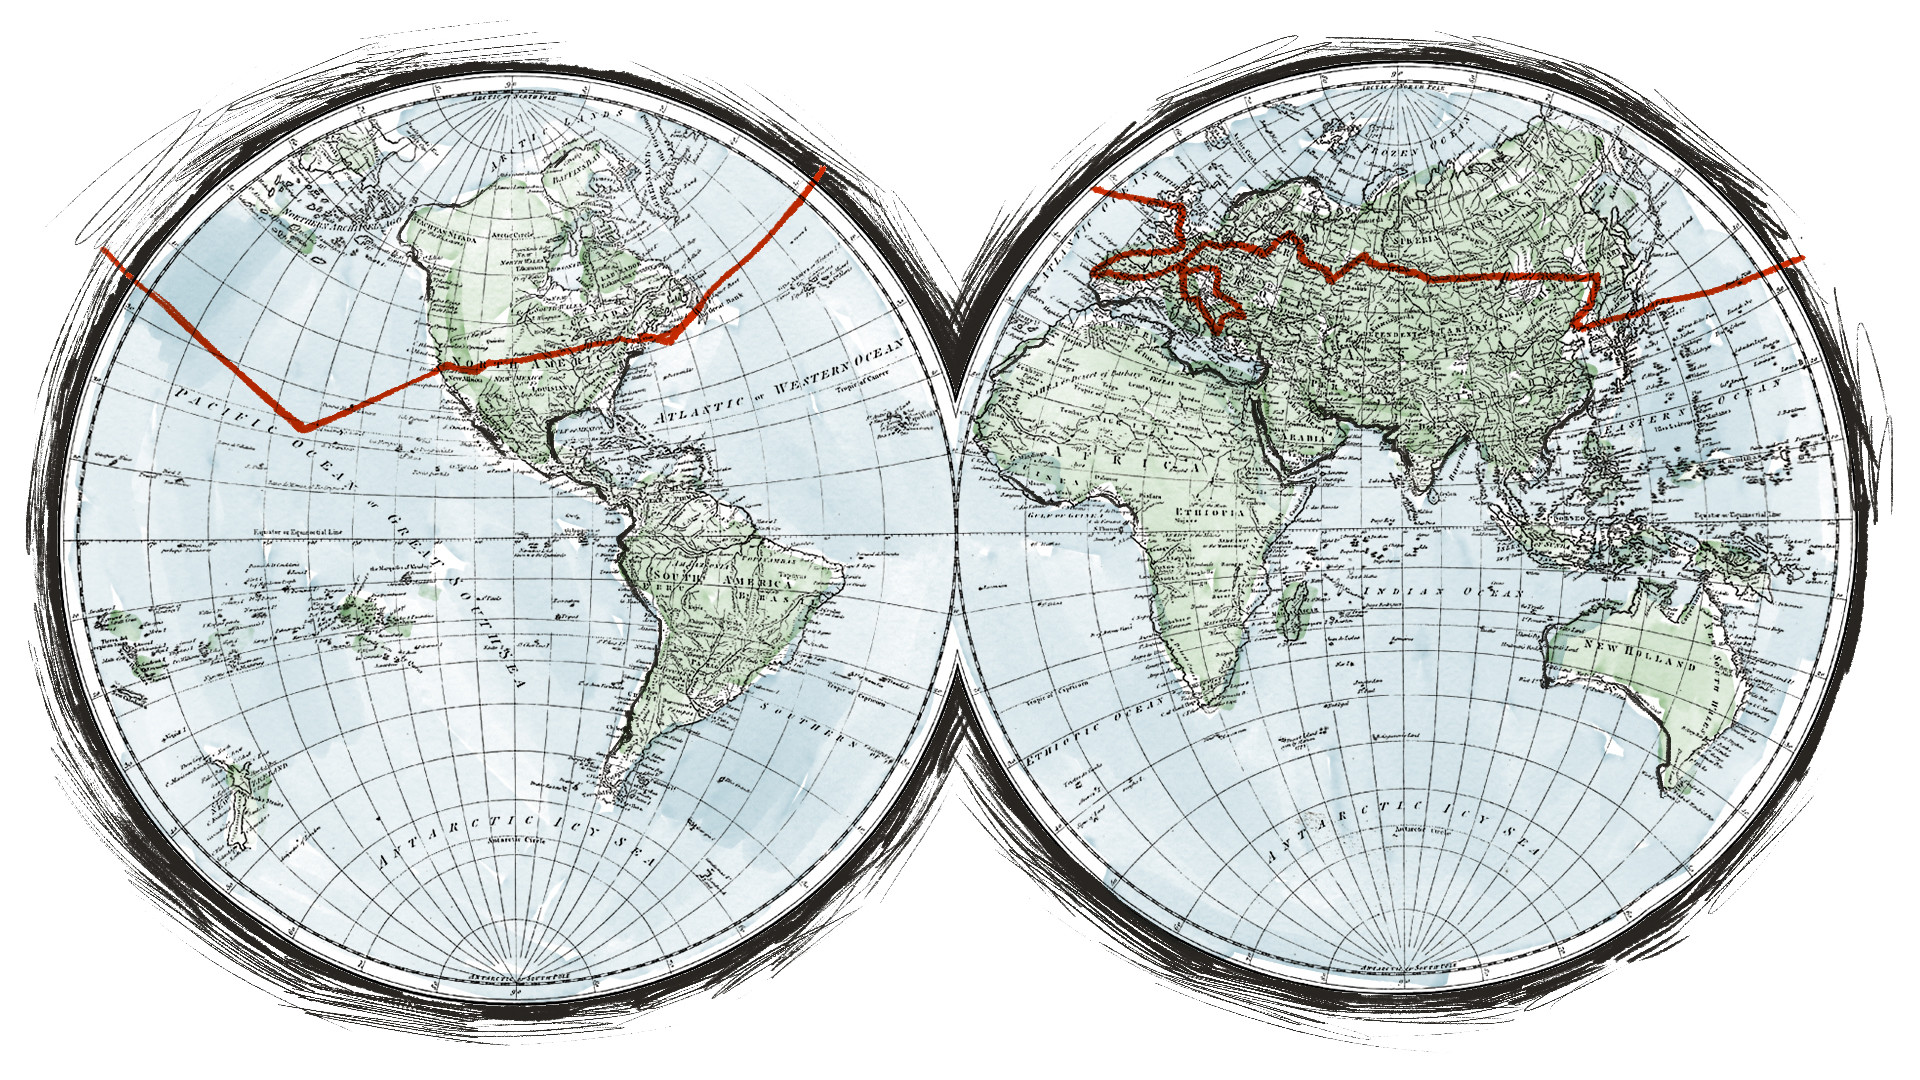 Onisim Panratov's approximate route around the globe